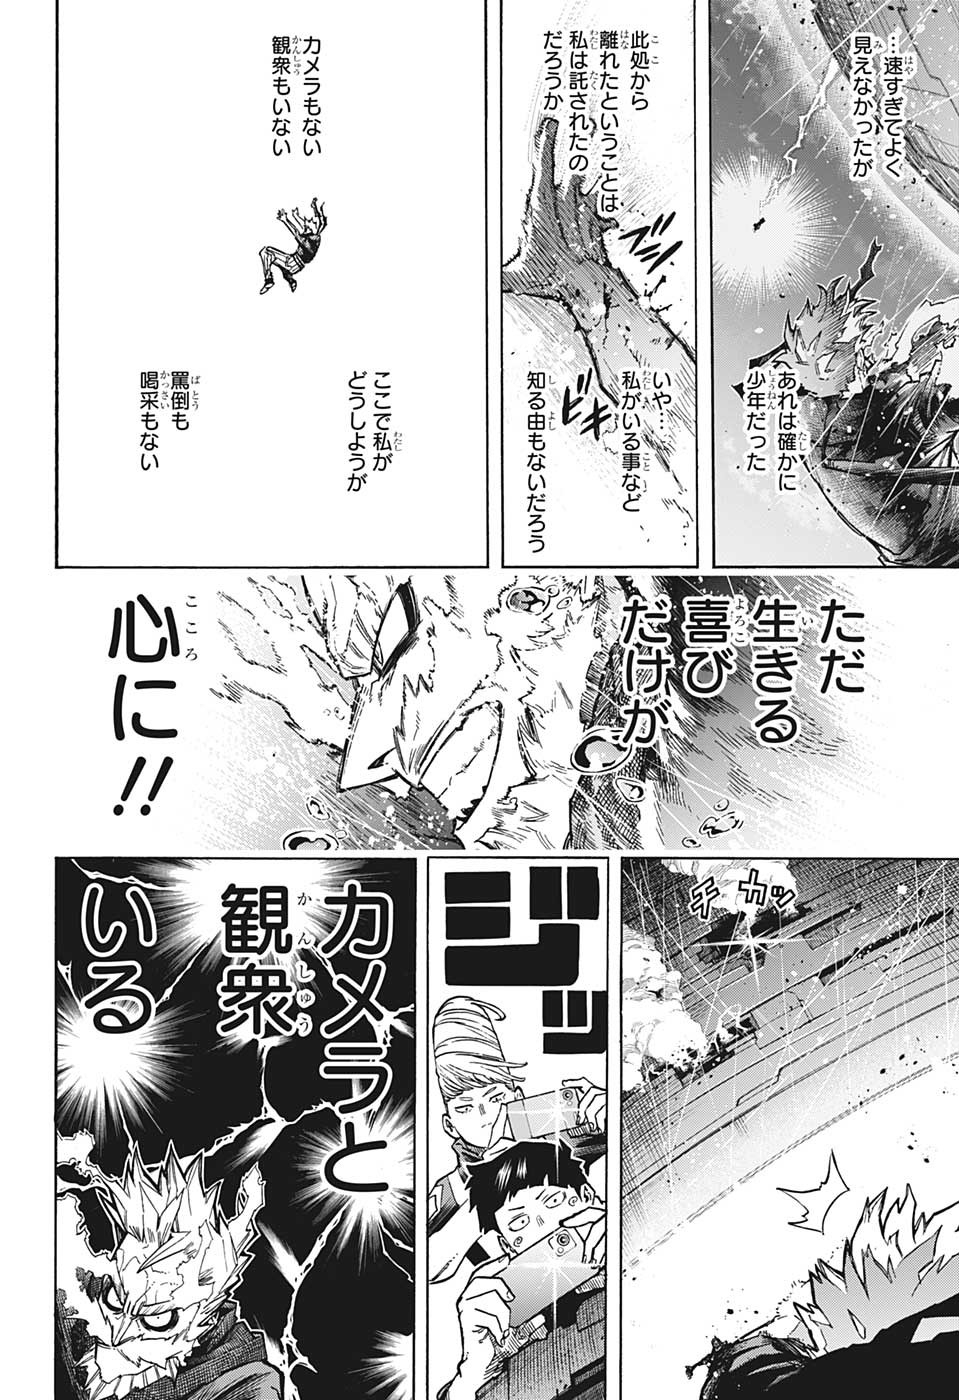 Boku no Hero Academia - Chapter 380 - Page 2